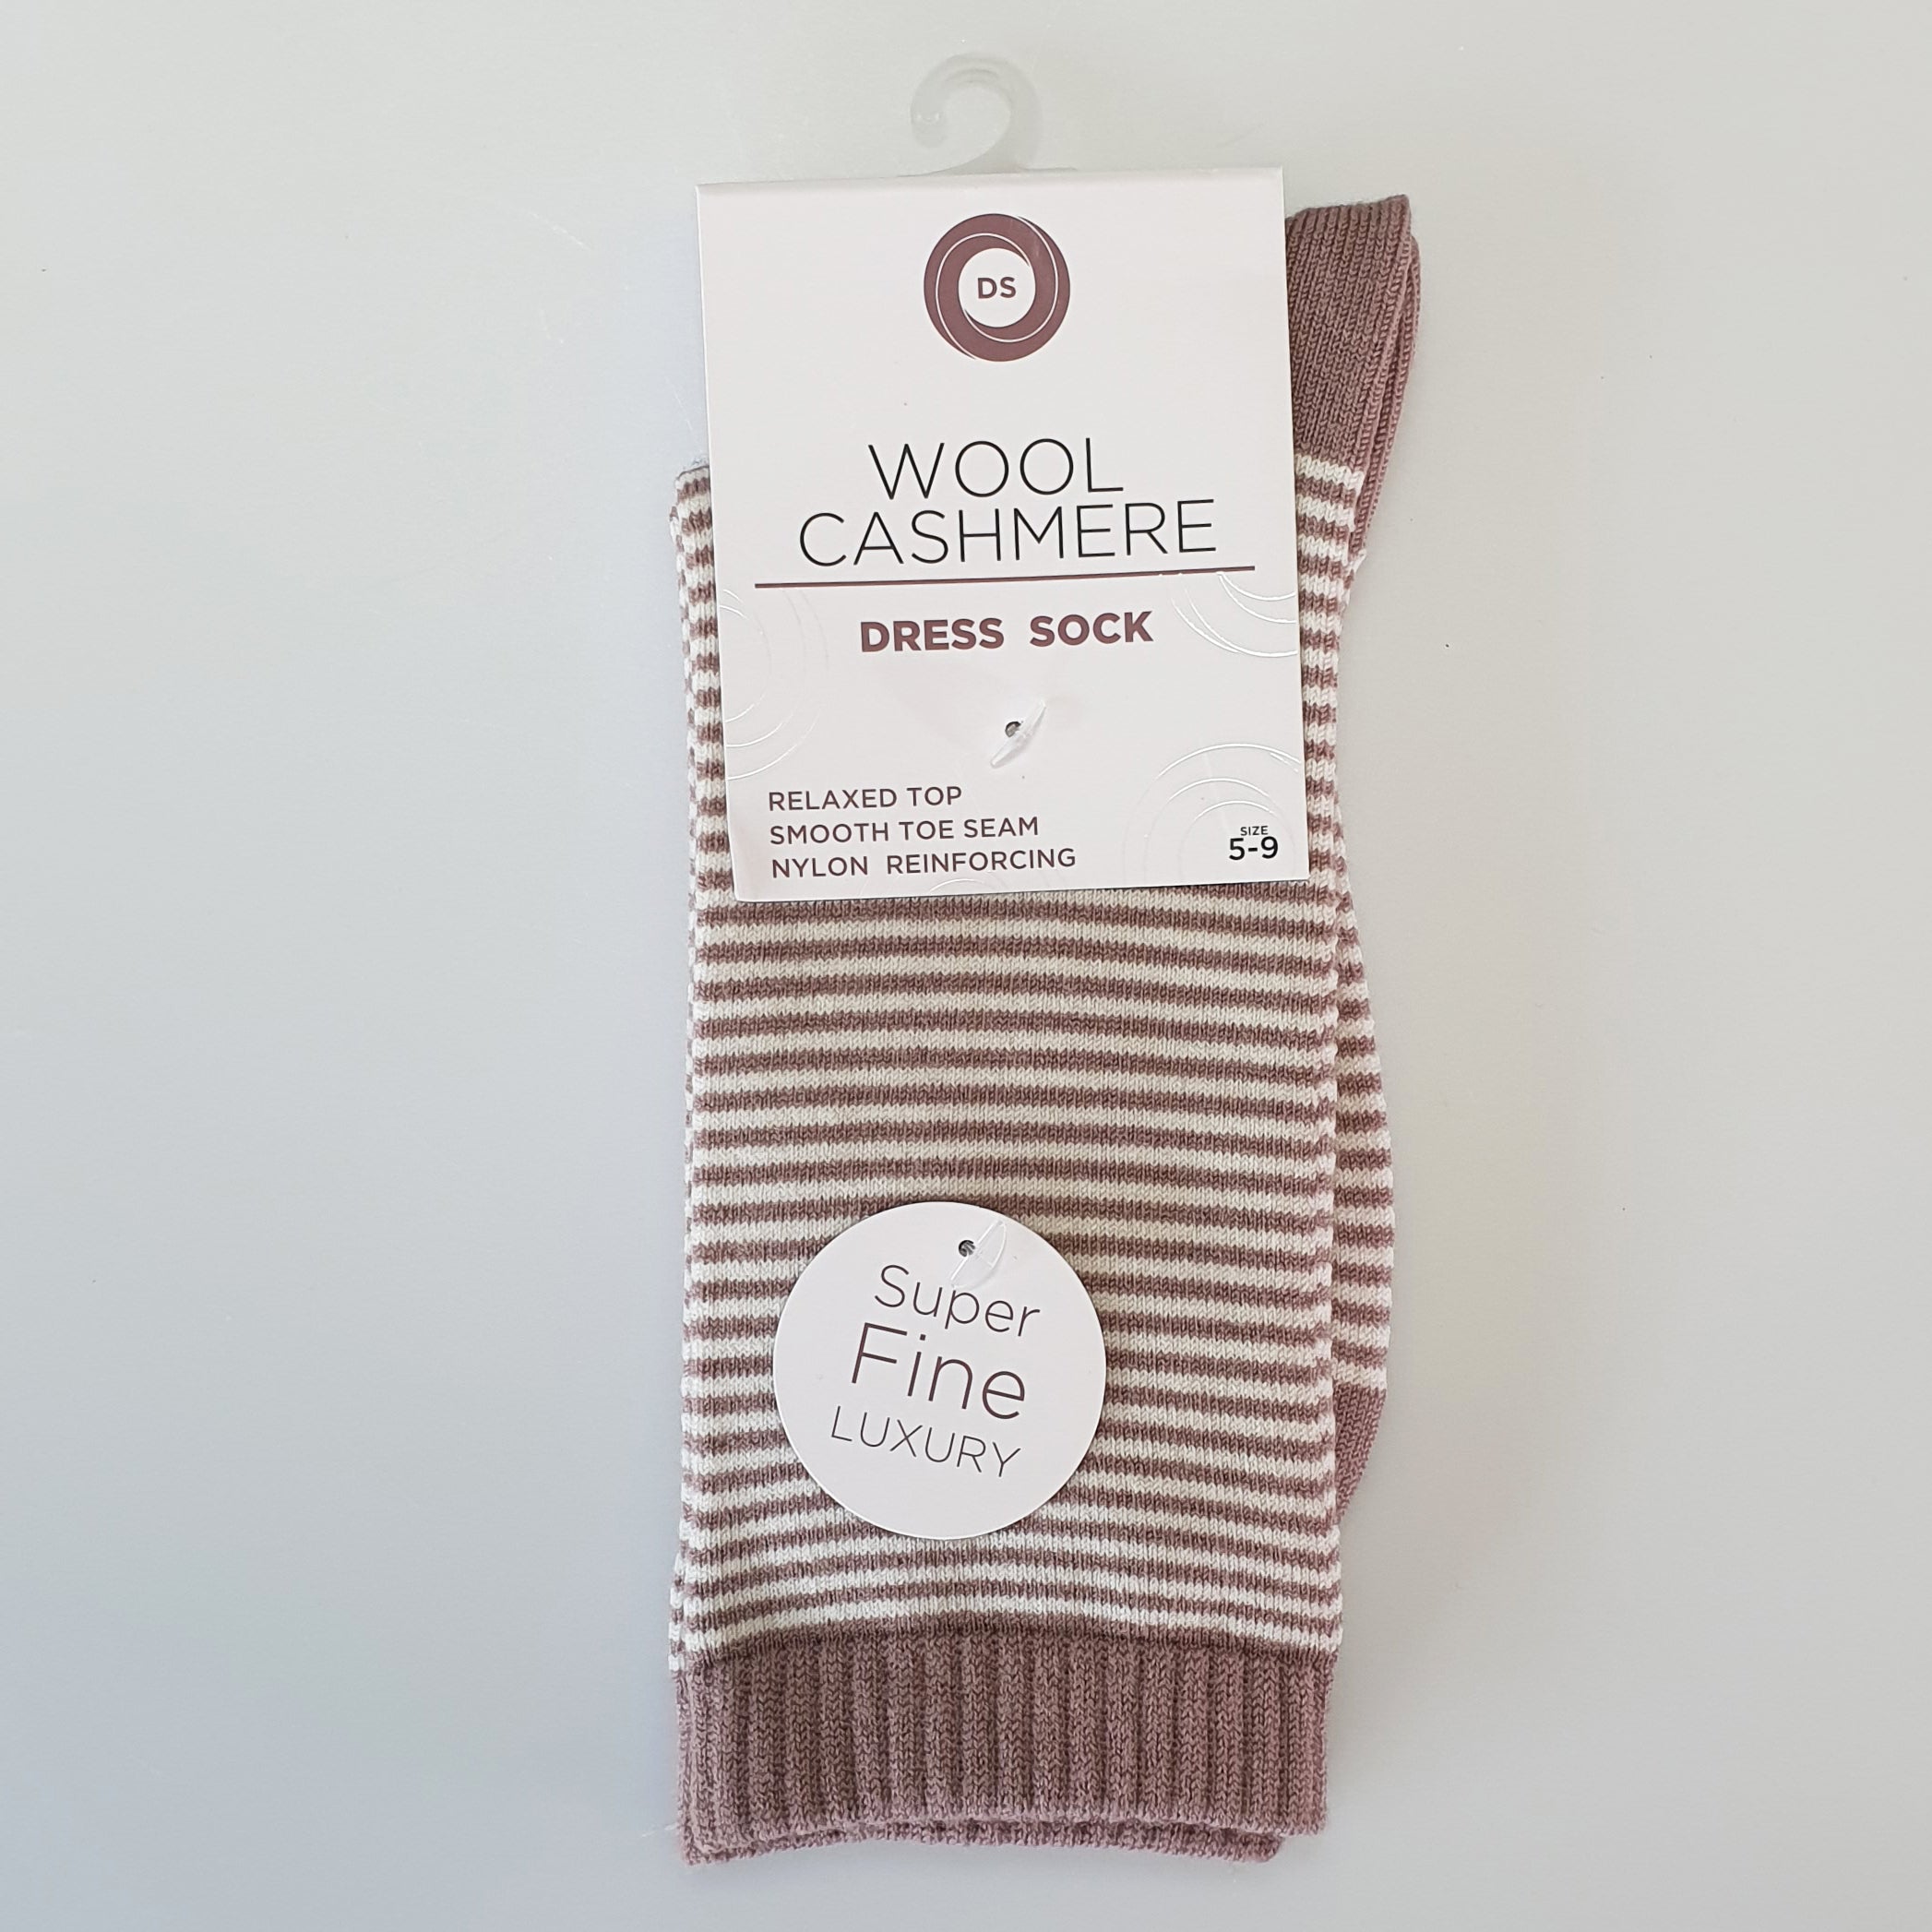 DS Wool Cashmere Dress Socks - Striped Dusky Rose